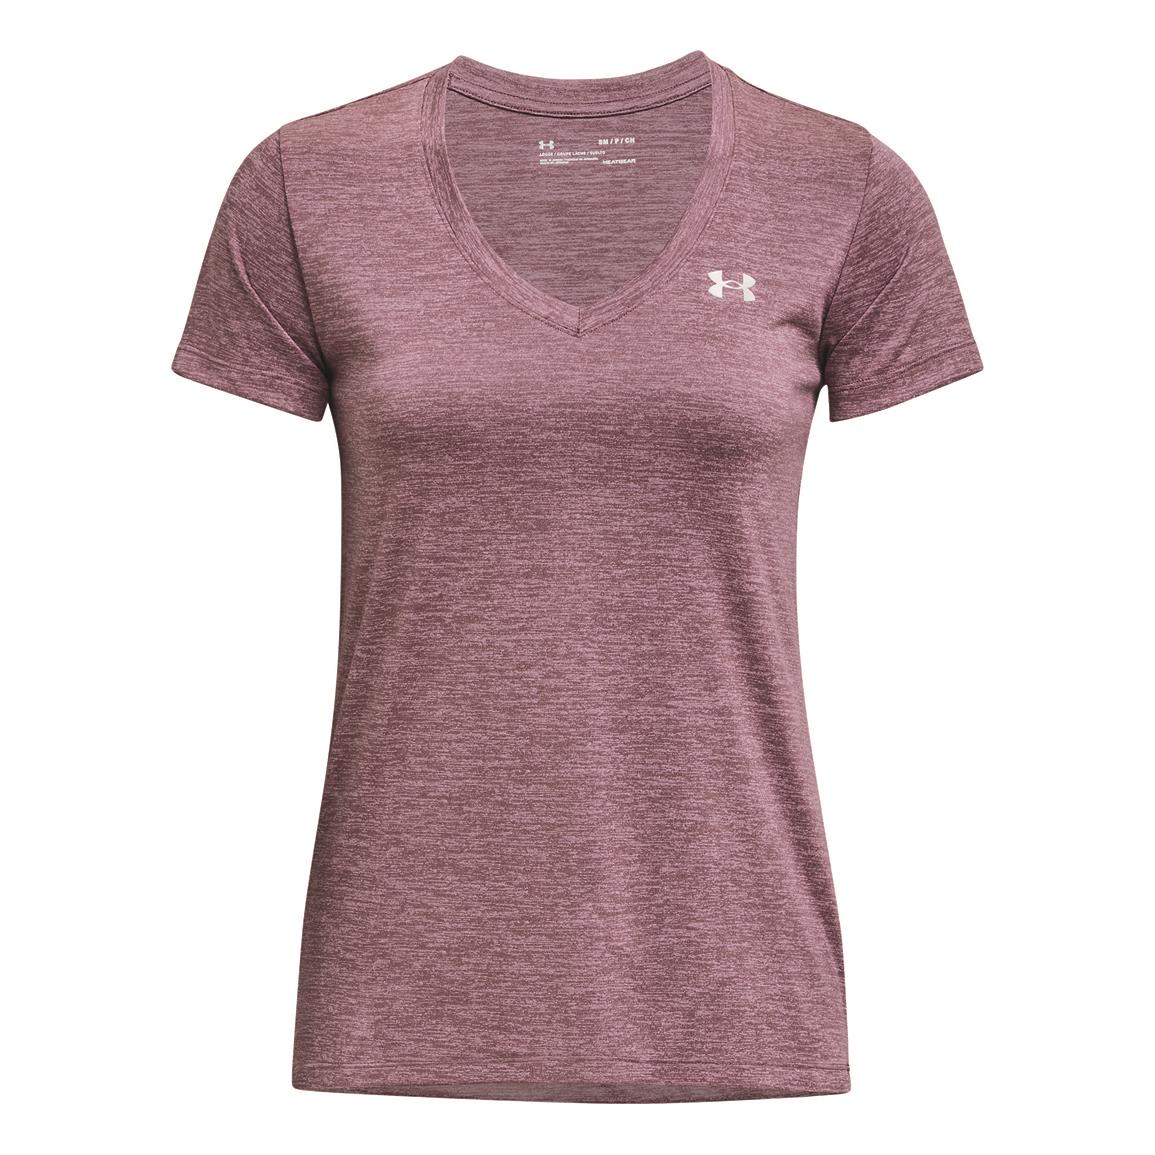 Under Armour Women's Tech Twist V-neck Shirt, Misty Purple/white/metallic Silver